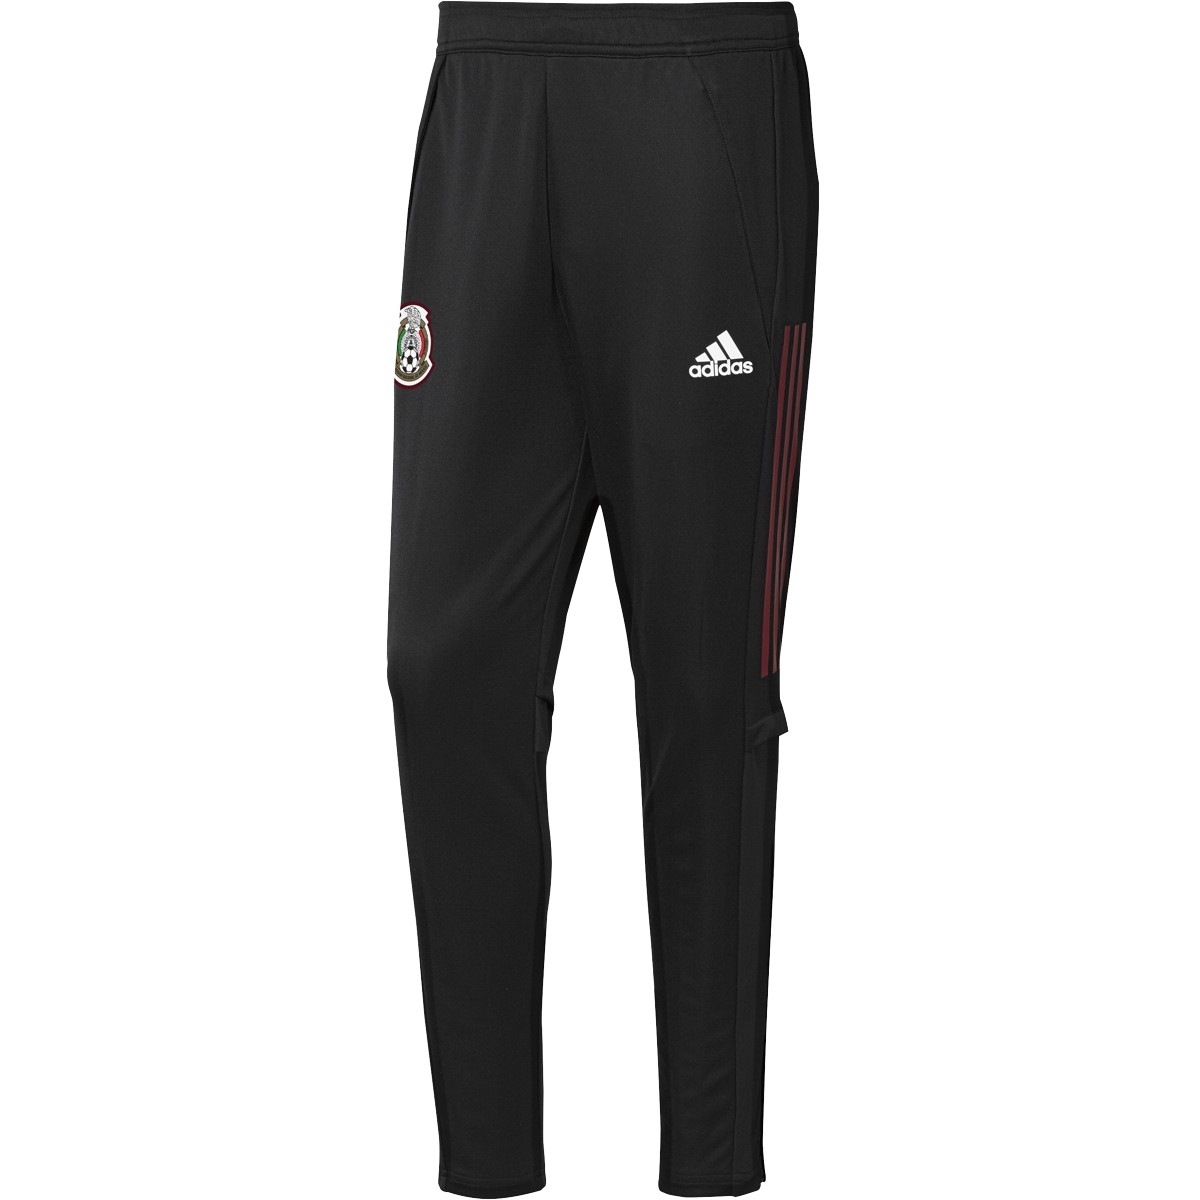 Adidas Mexico Training Pants - Soccer Premier